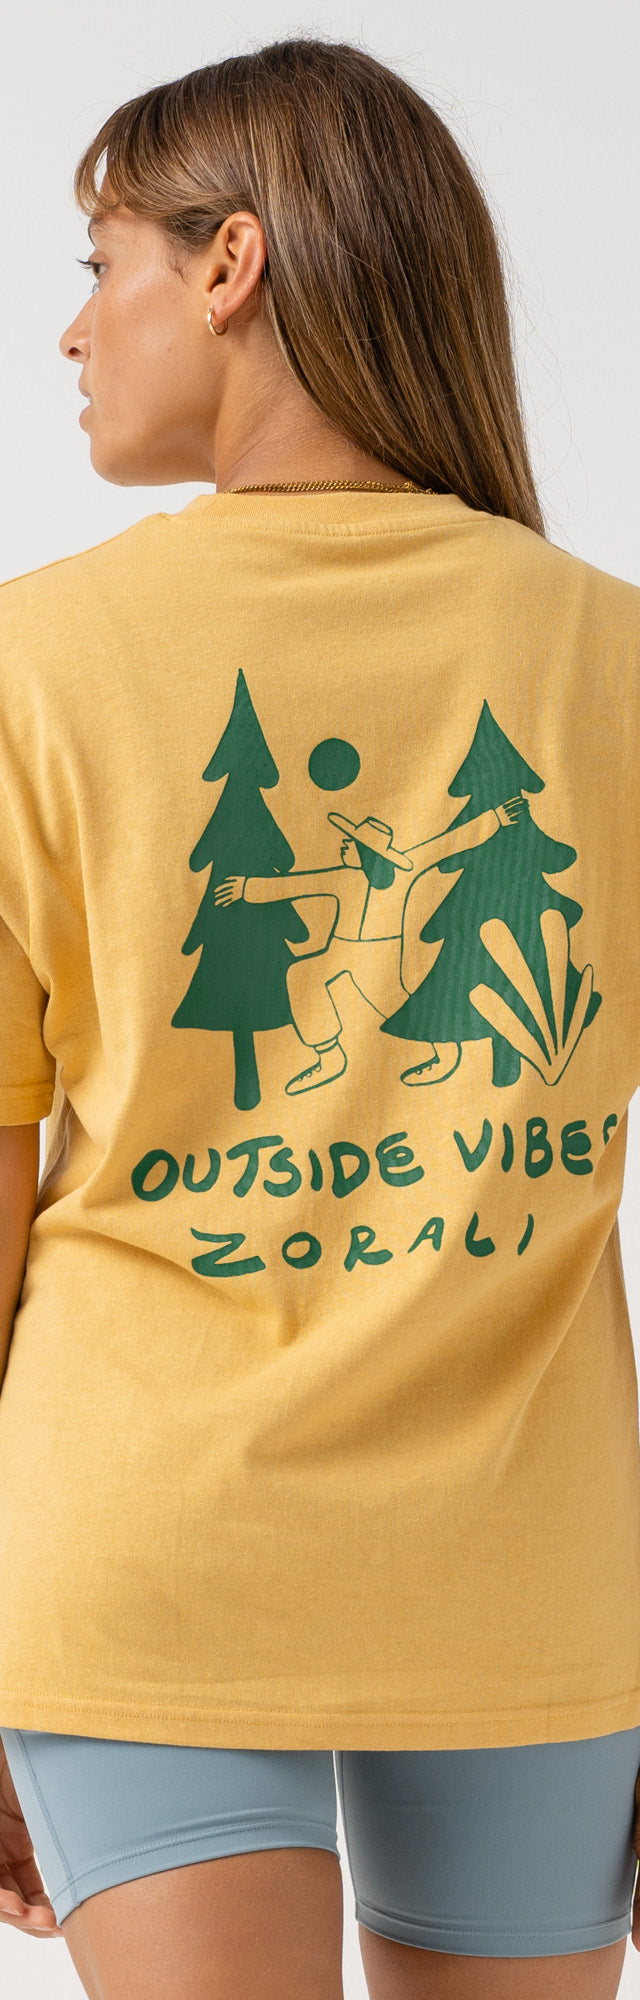 Outside Vibes T-Shirt Sunshine